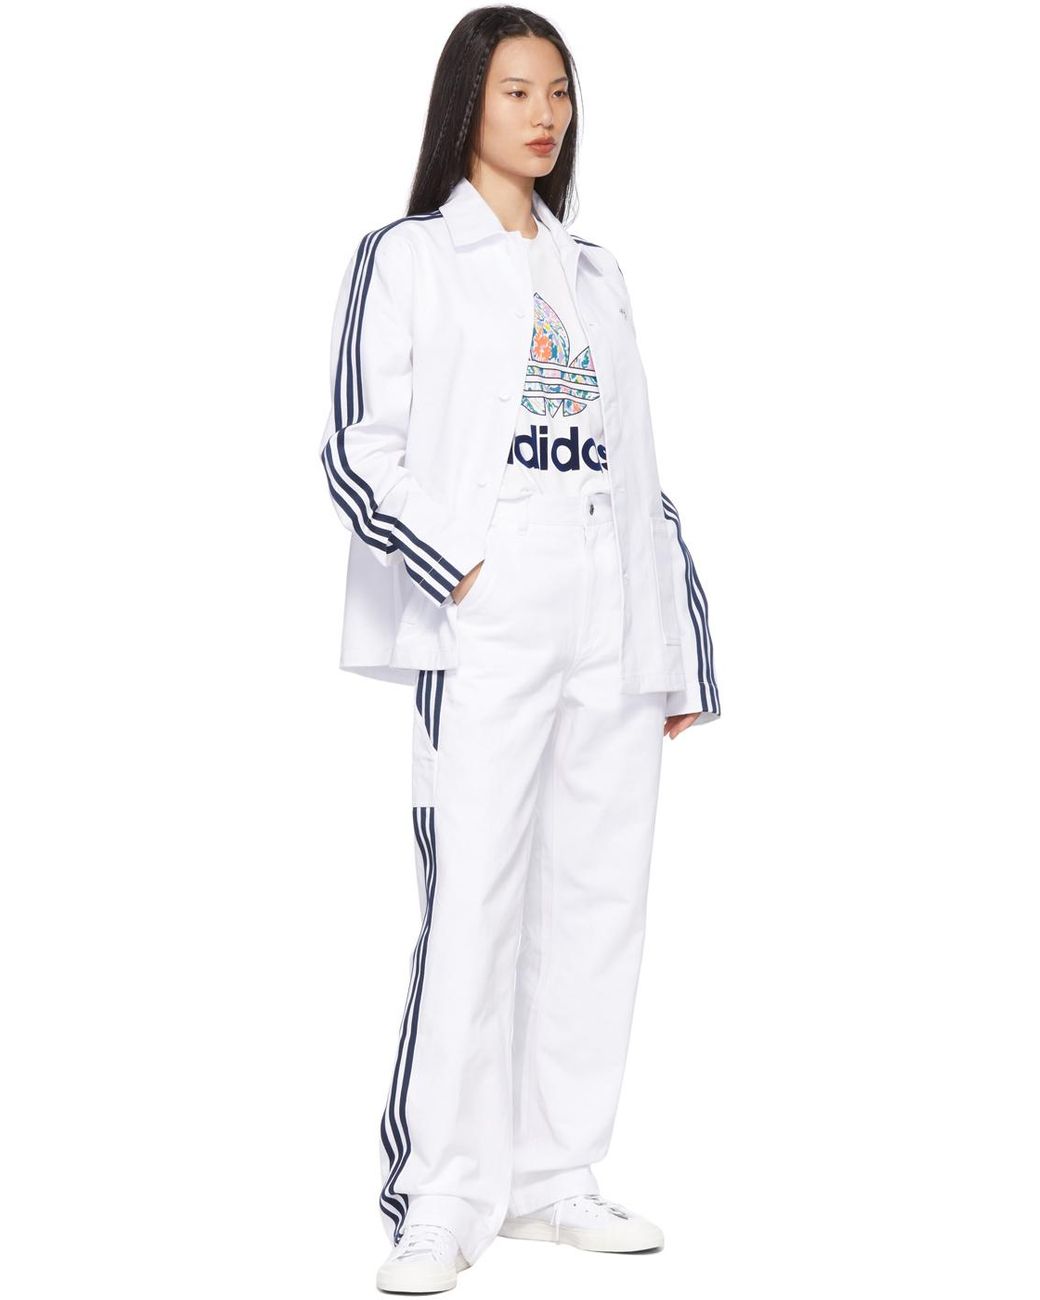 Adidas x Noah コラボ ペインターパンツ Mサイズ 人気大割引 3912円 